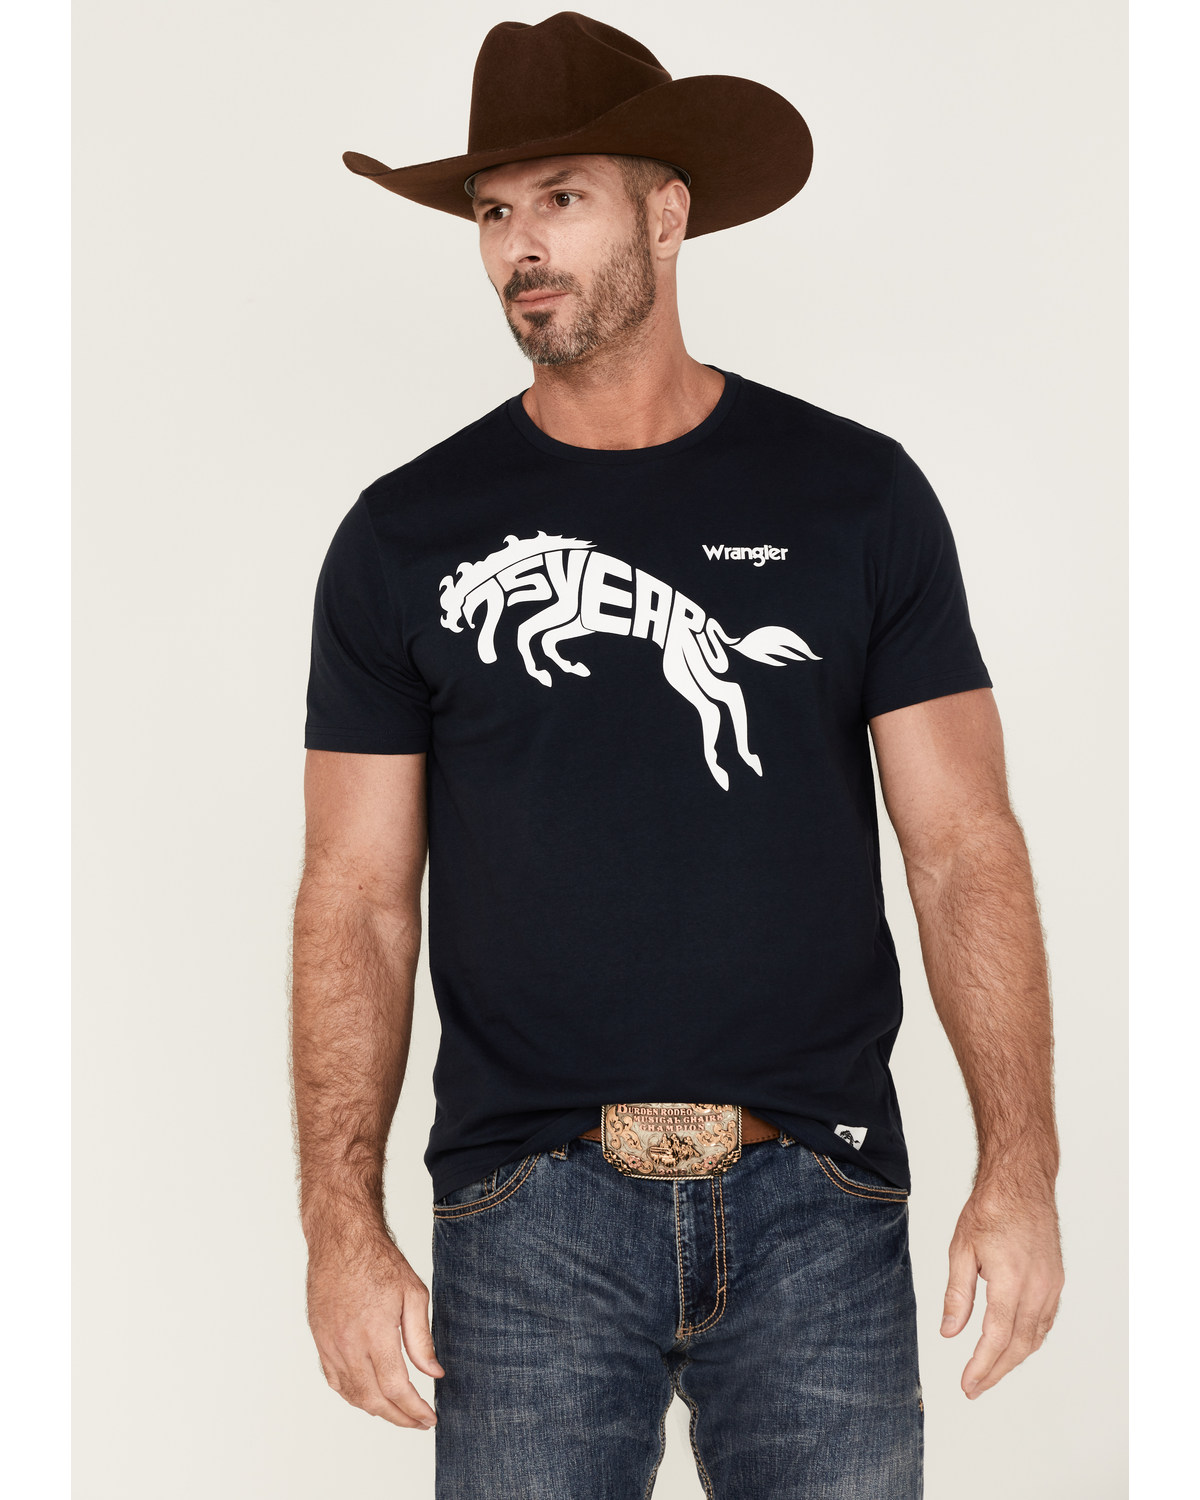 Wrangler Men's 75 Years Horse Graphic T-Shirt